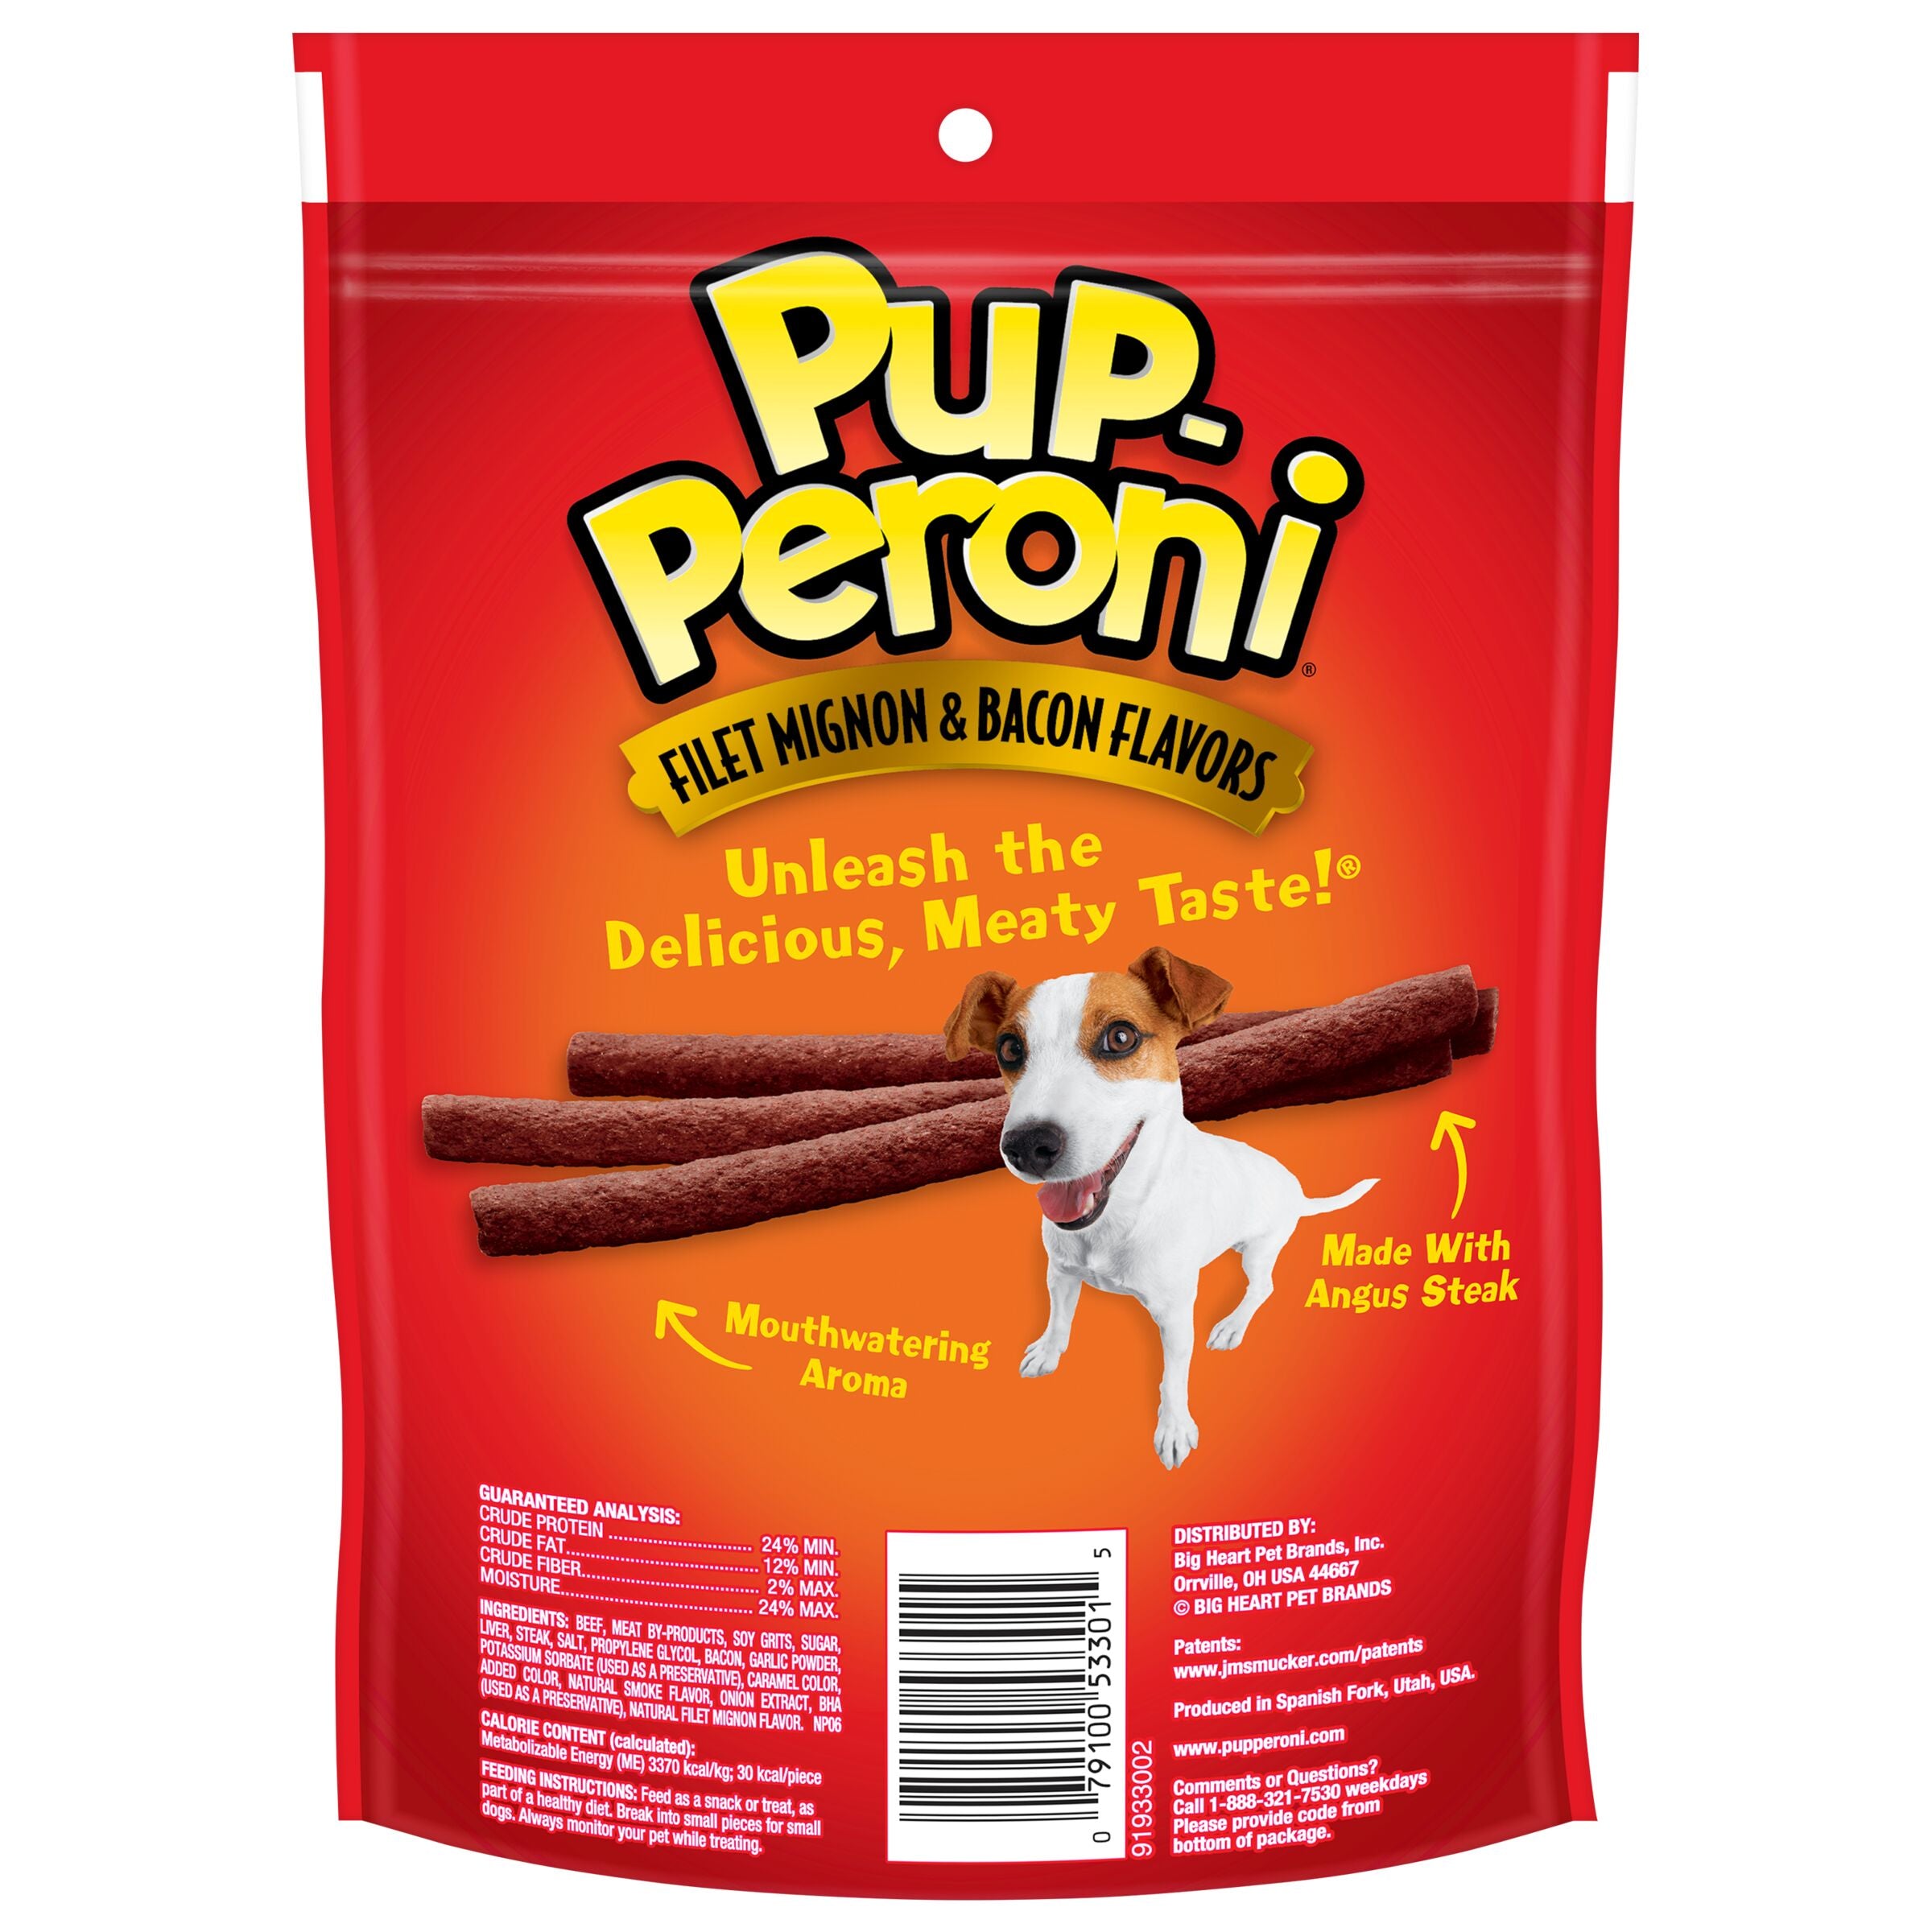 Pup-Peroni Filet Mignon & Bacon Flavor Dog Treats, 5.6 oz